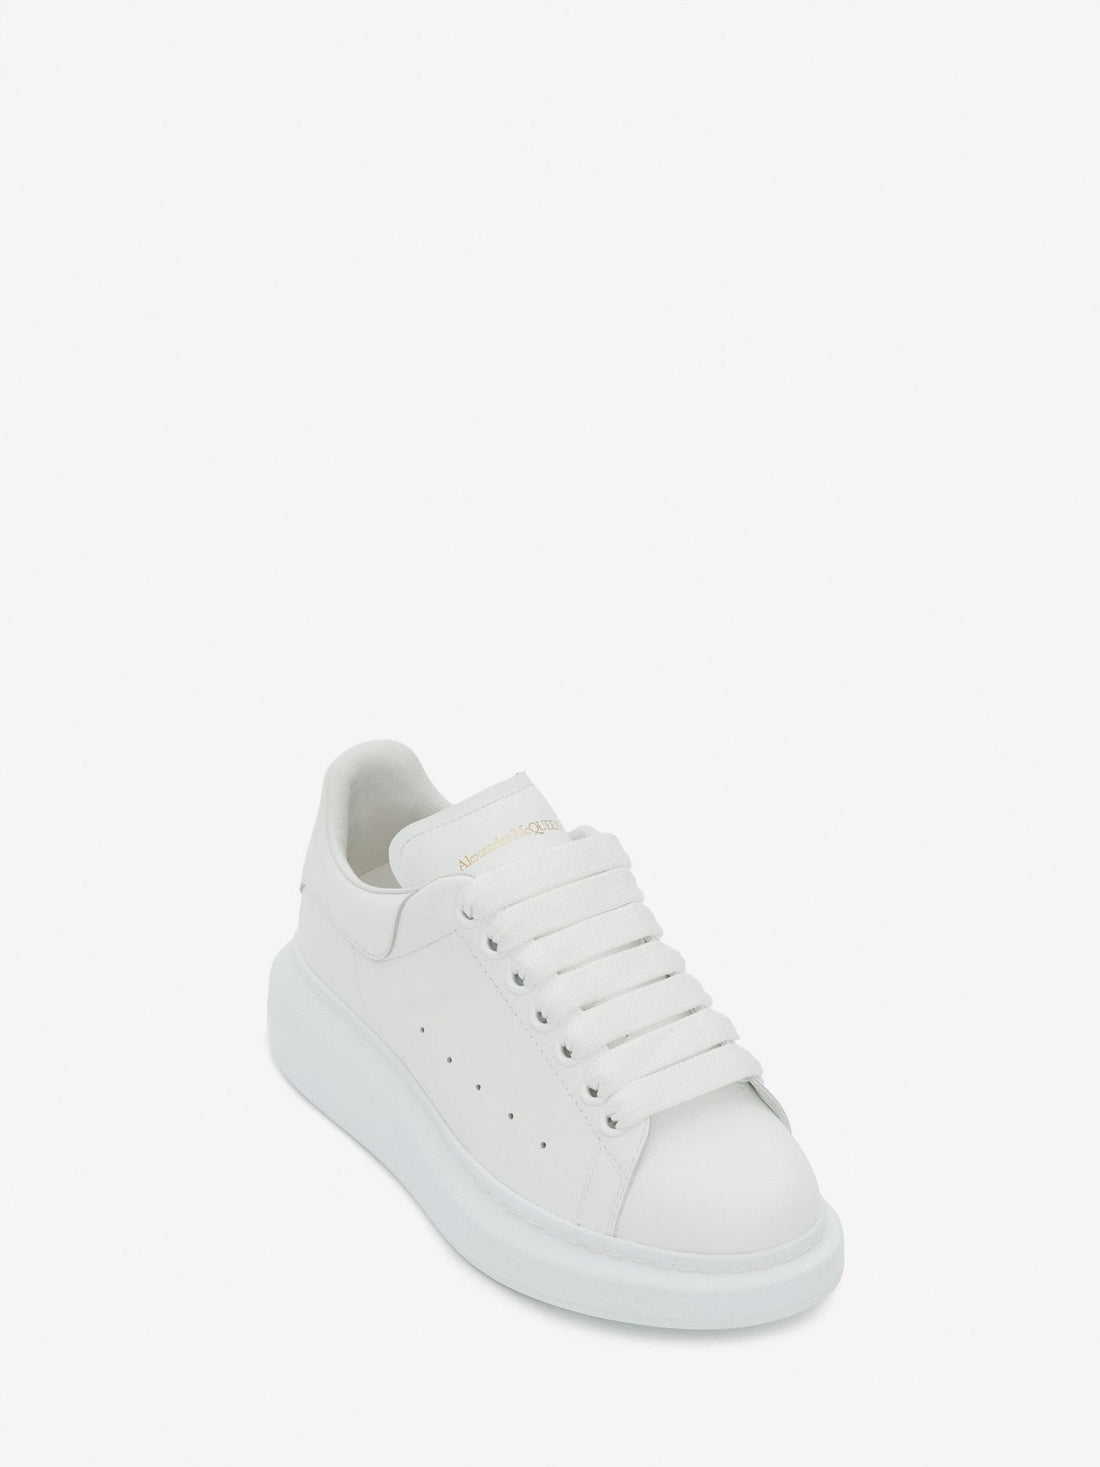 Alexander McQueen Oversized Sneaker in White - VIARESELL